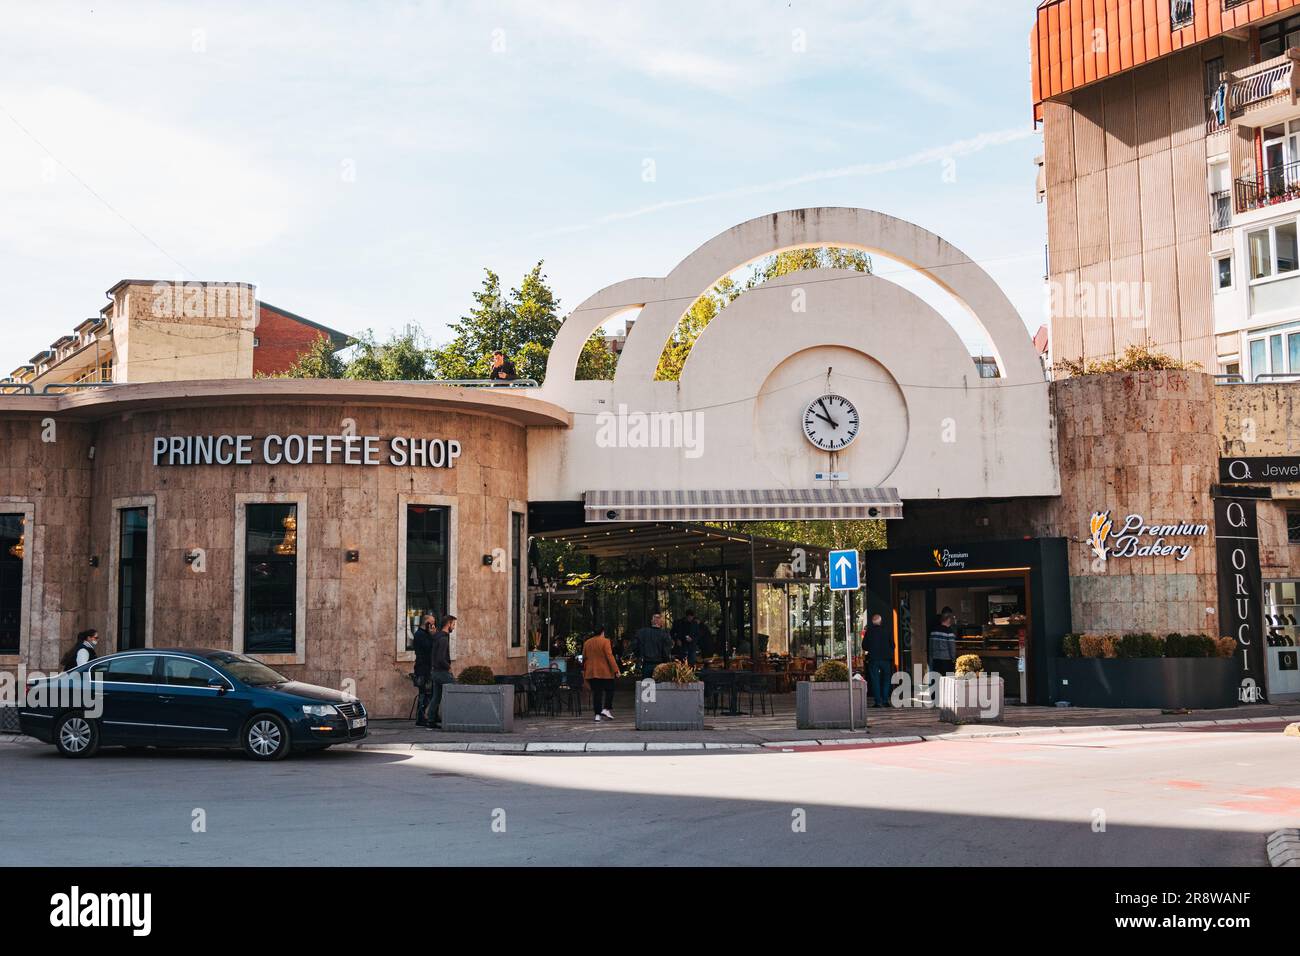 a Prince Coffee Shop at the entrance to a shopping arcade mall in Pristina, Kosovo Stock Photo